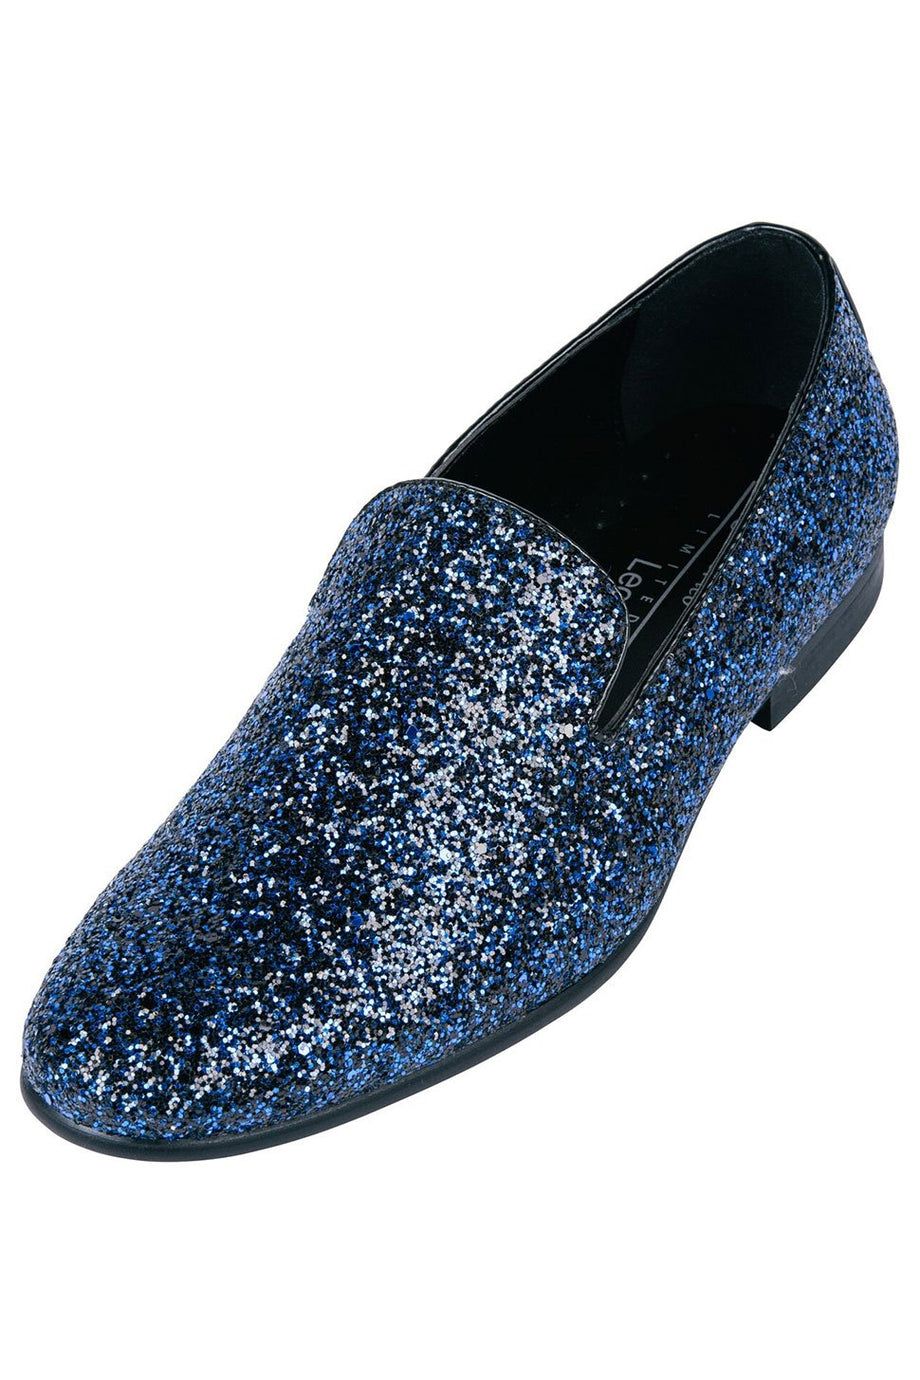 Frederico Leone "Sparkle" Blue Shoes